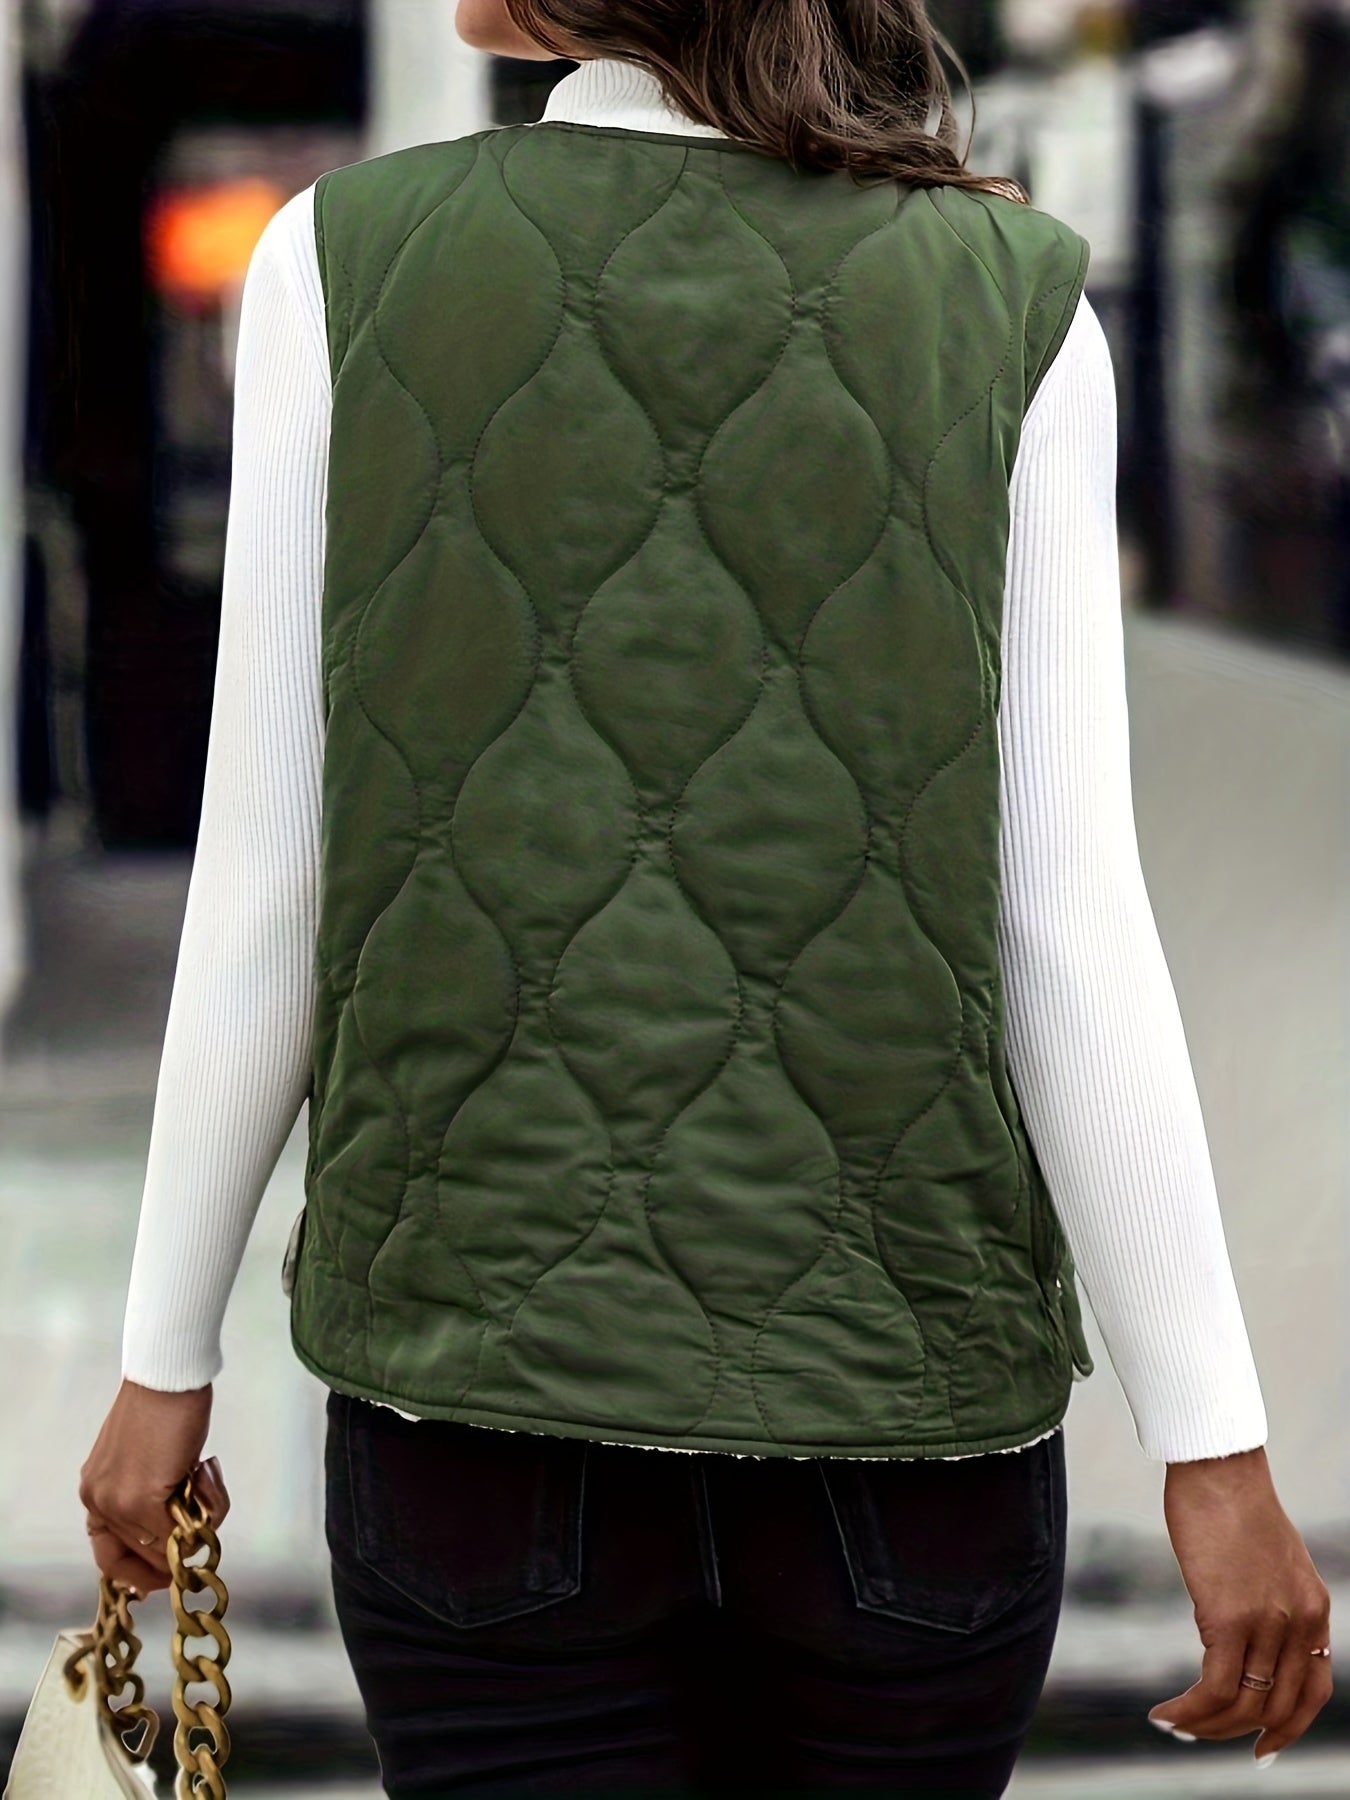 vlovelaw  V-neck Fleece Warm Sleeveless Jacket, Warm Zipper Vest For Winter Fall Outdoor Sports, Women's Clothing